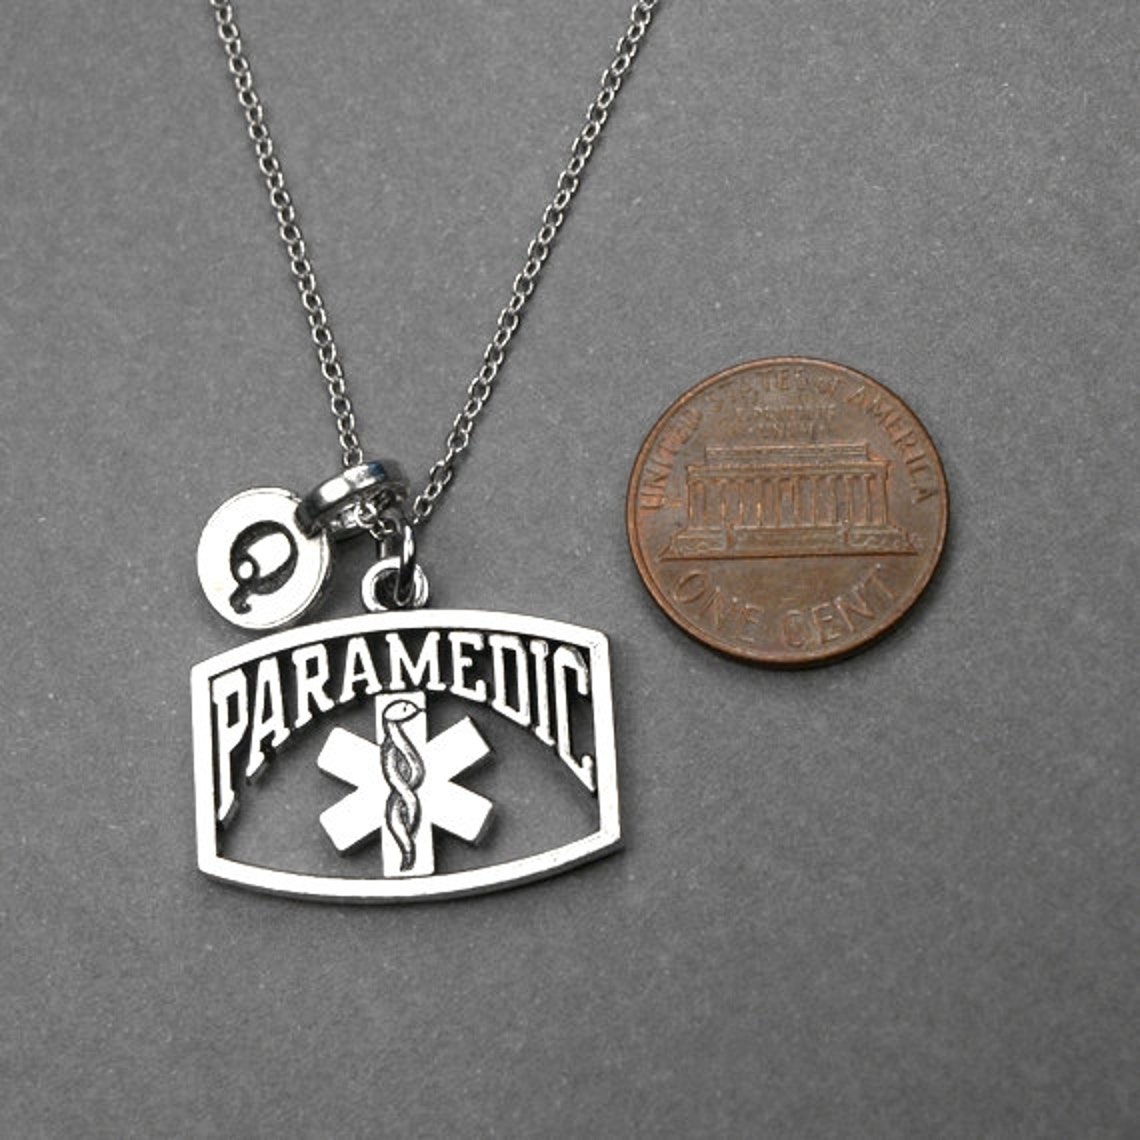 Paramedic Necklace Paramedic charm necklace paramedic symbol | Etsy